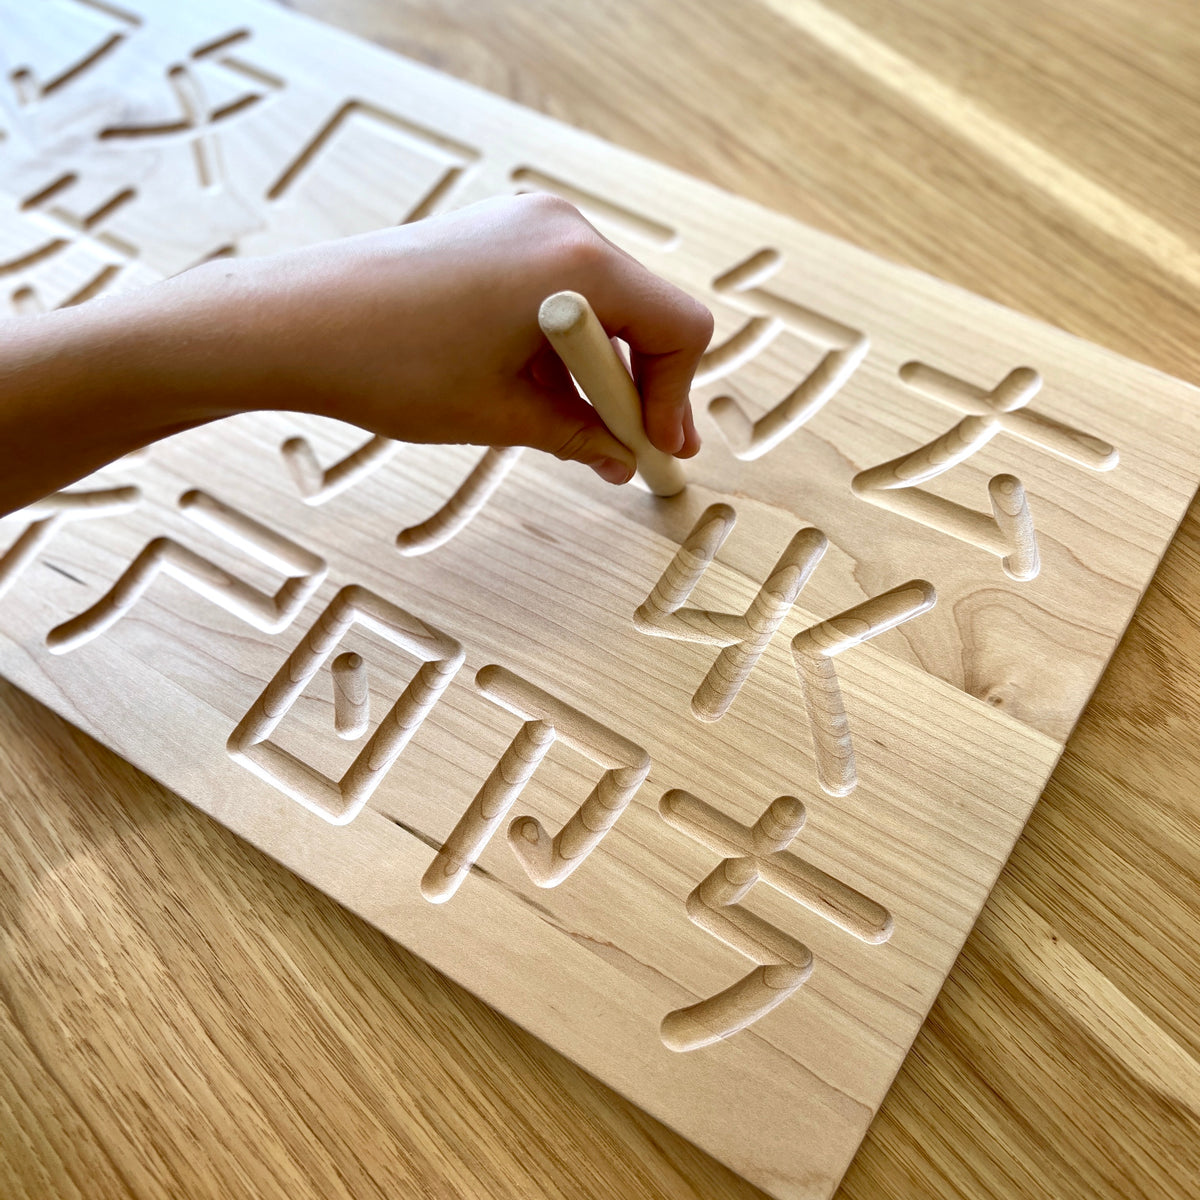 Taiwanese Alphabet Tracing Board